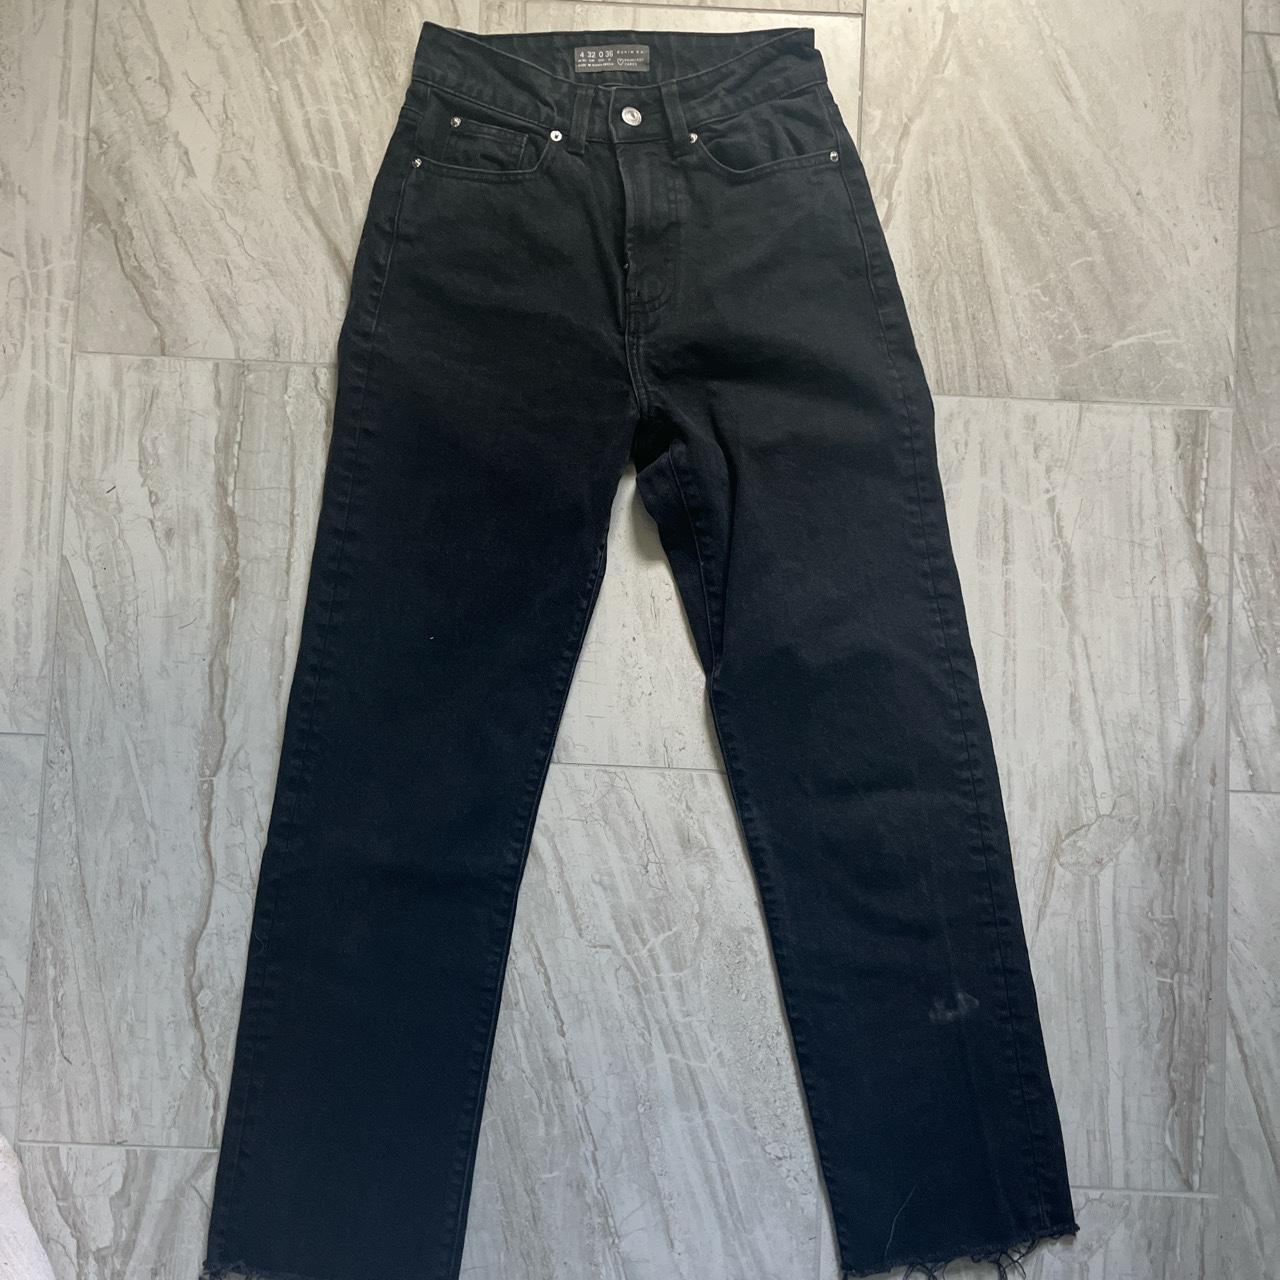 Black Primark jeans, like new - Depop